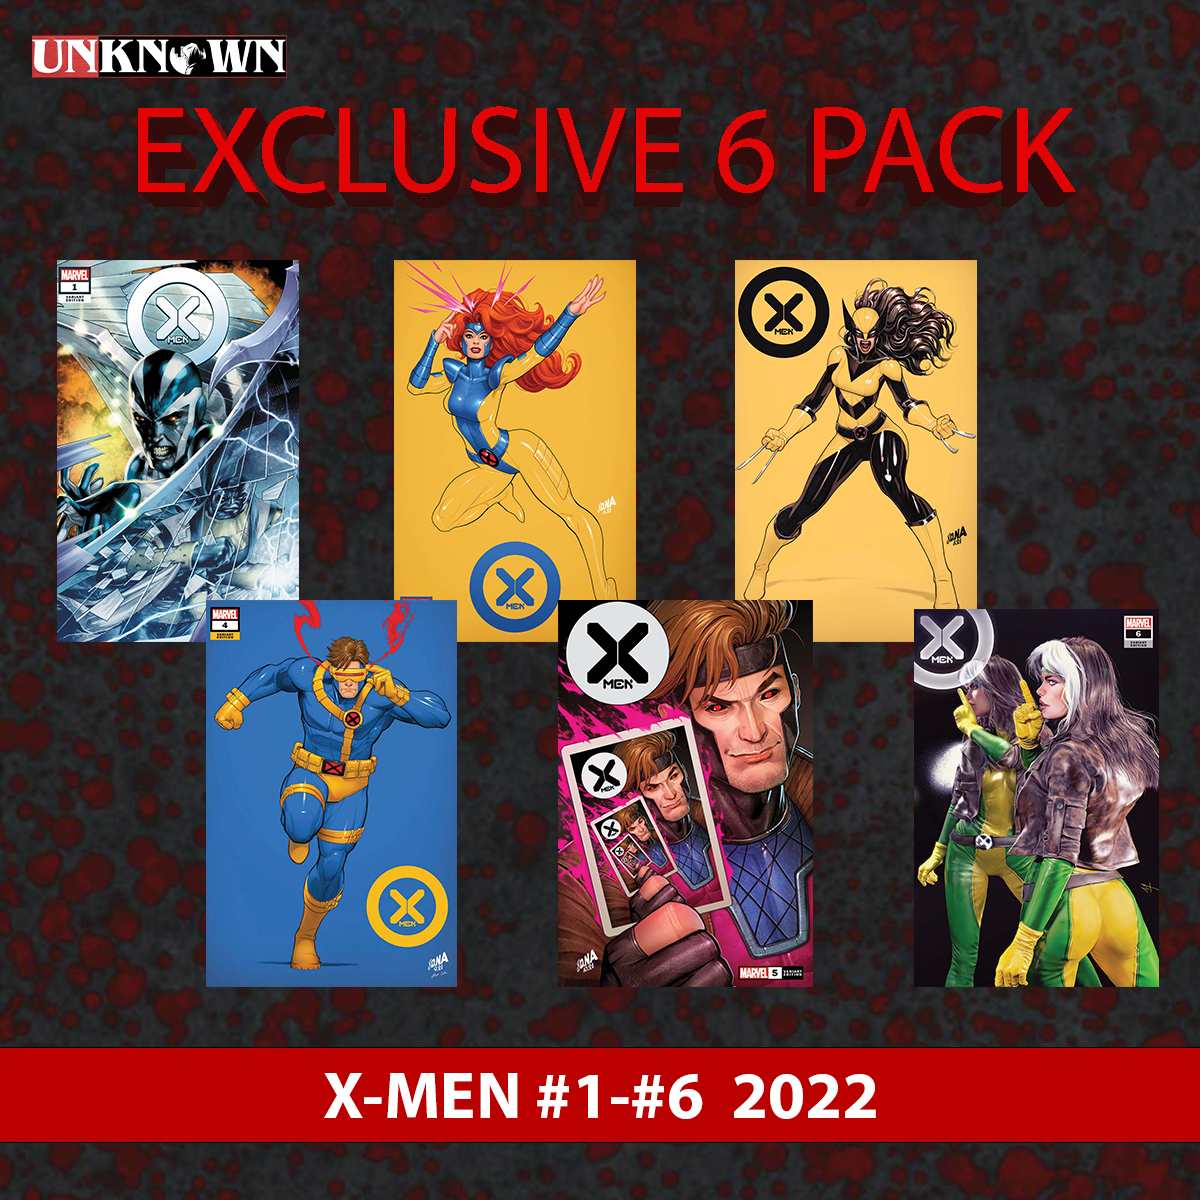 [6 PACK] X-MEN (1-6) #1 #2 #3 #4 #5 #6 UNKNOWN COMICS EXCLUSIVE VAR [04/27/2022]